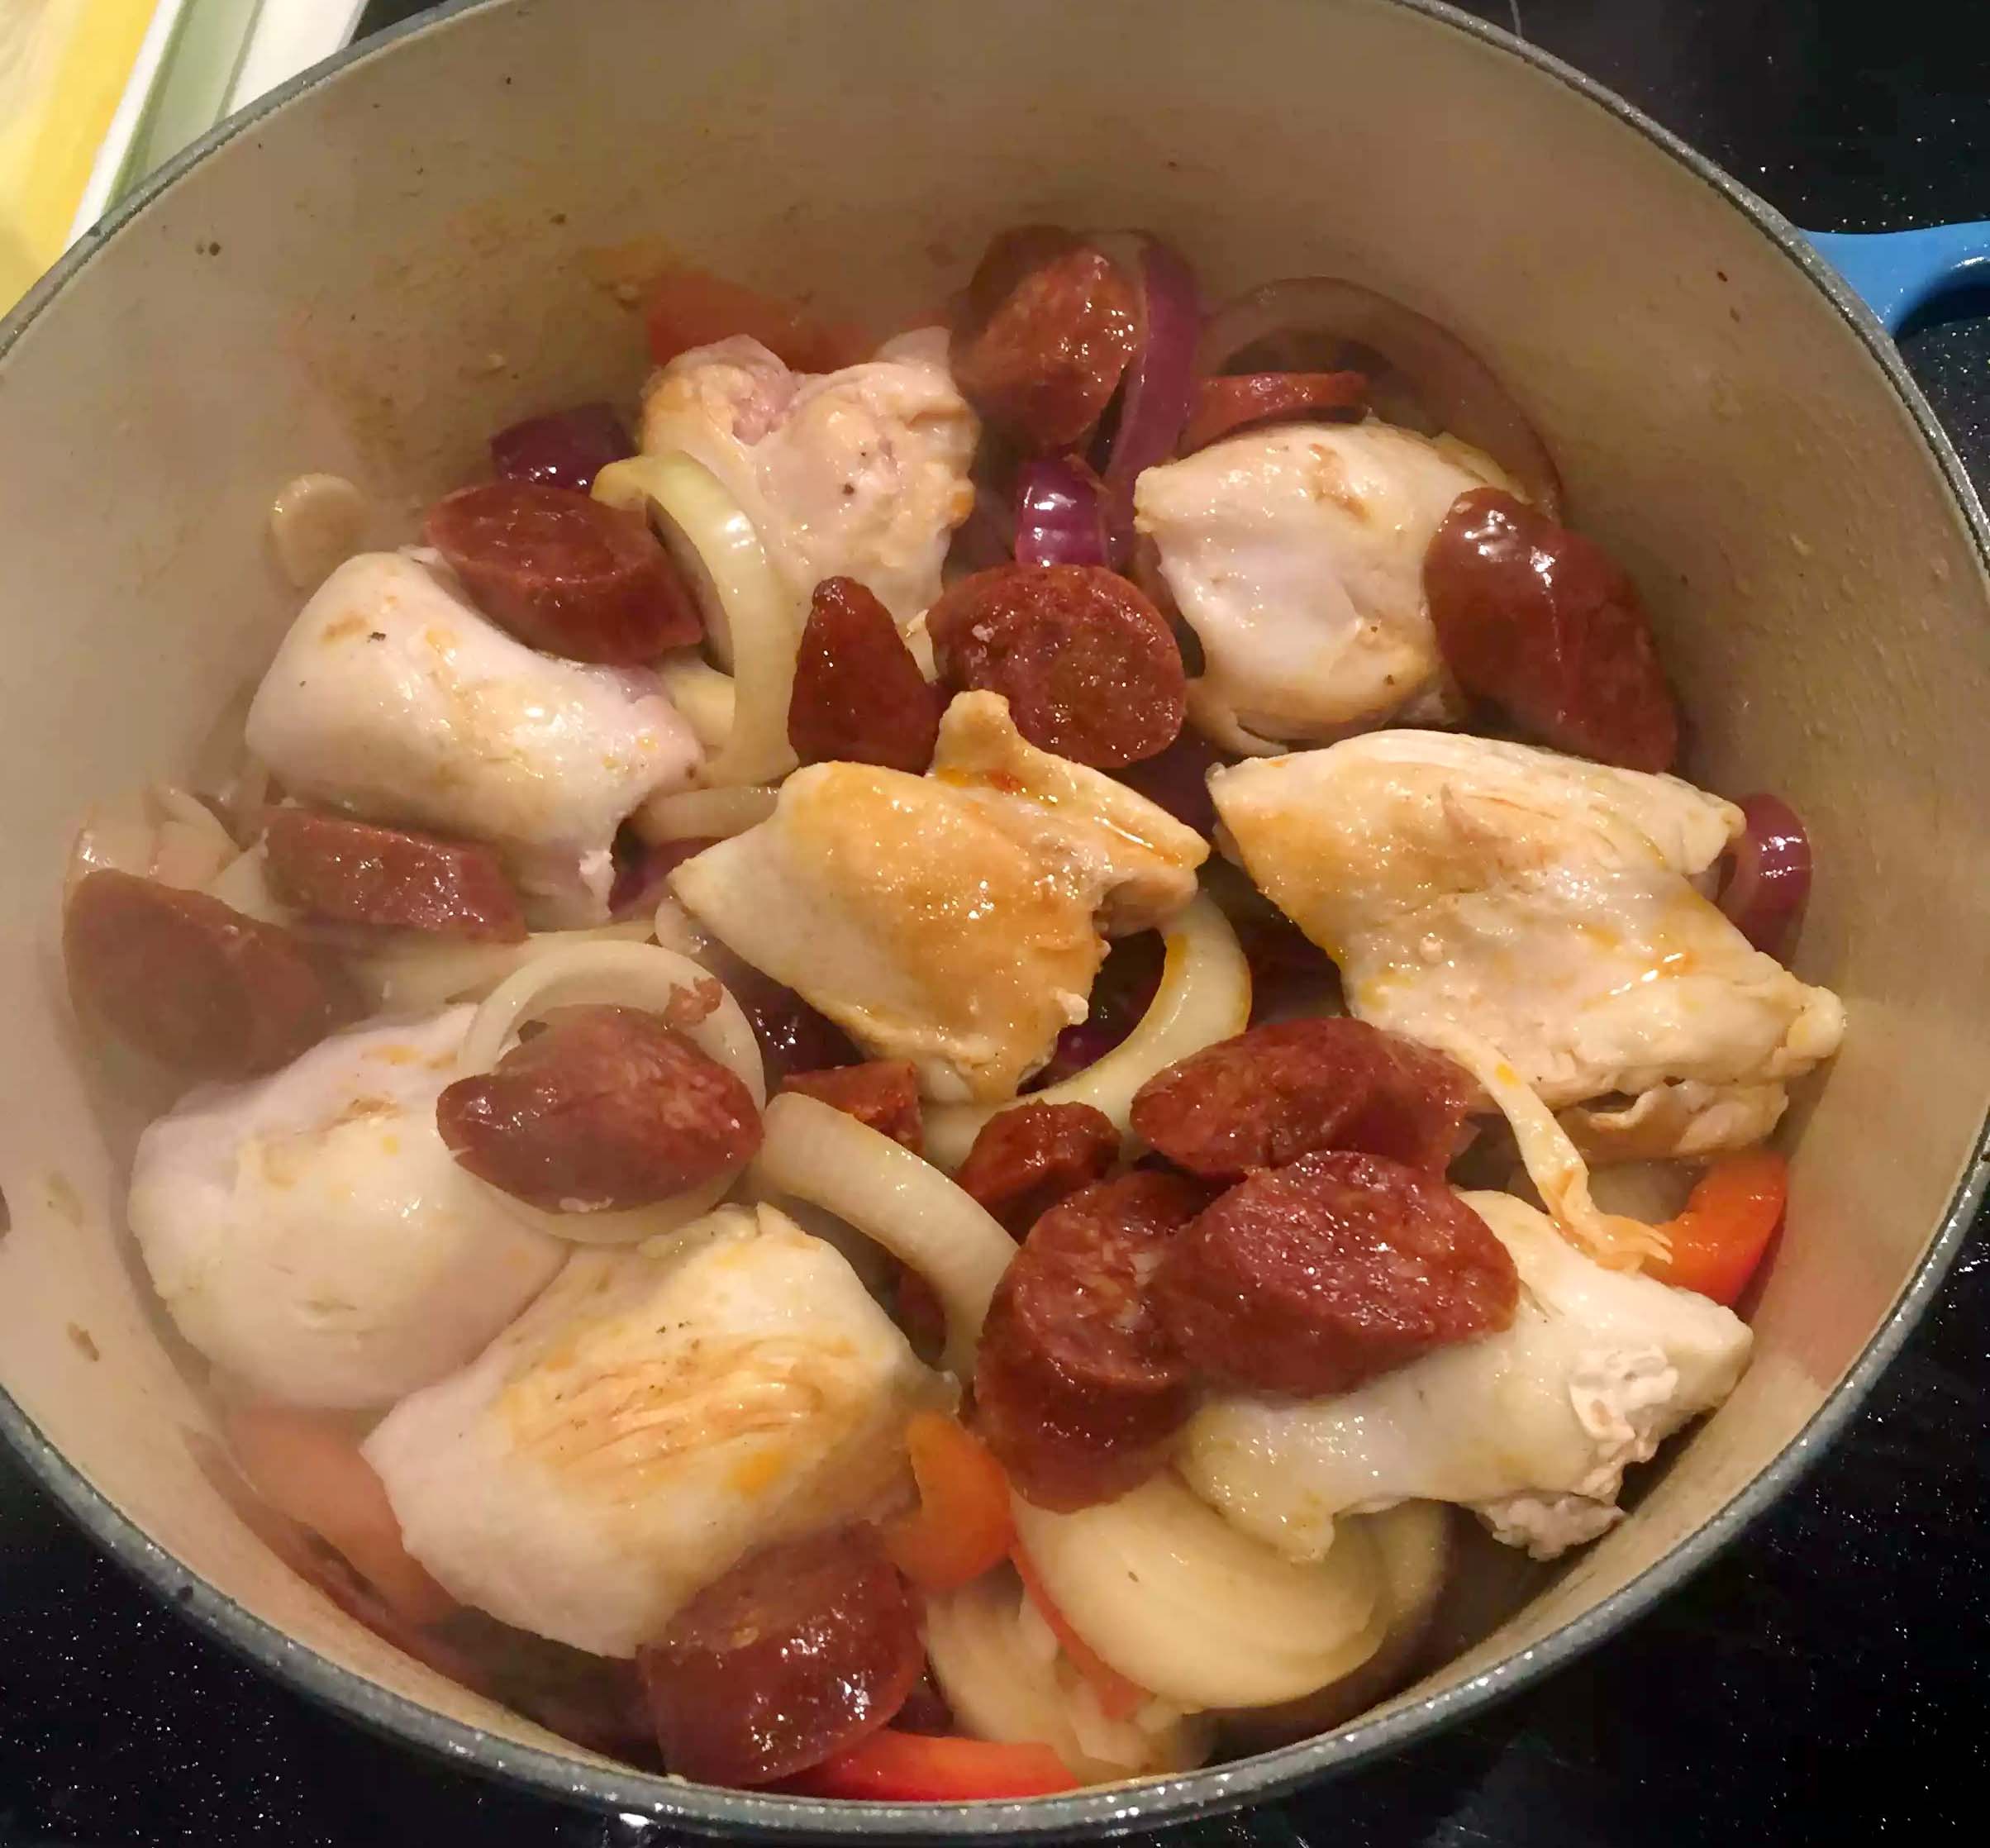 Chicken & Chorizo Stew with Rioja, Spanish Style by Emma Eats & Explores - Gluten-Free, Grain-Free, Dairy-Free, Sugar-Free, SCD & Paleo